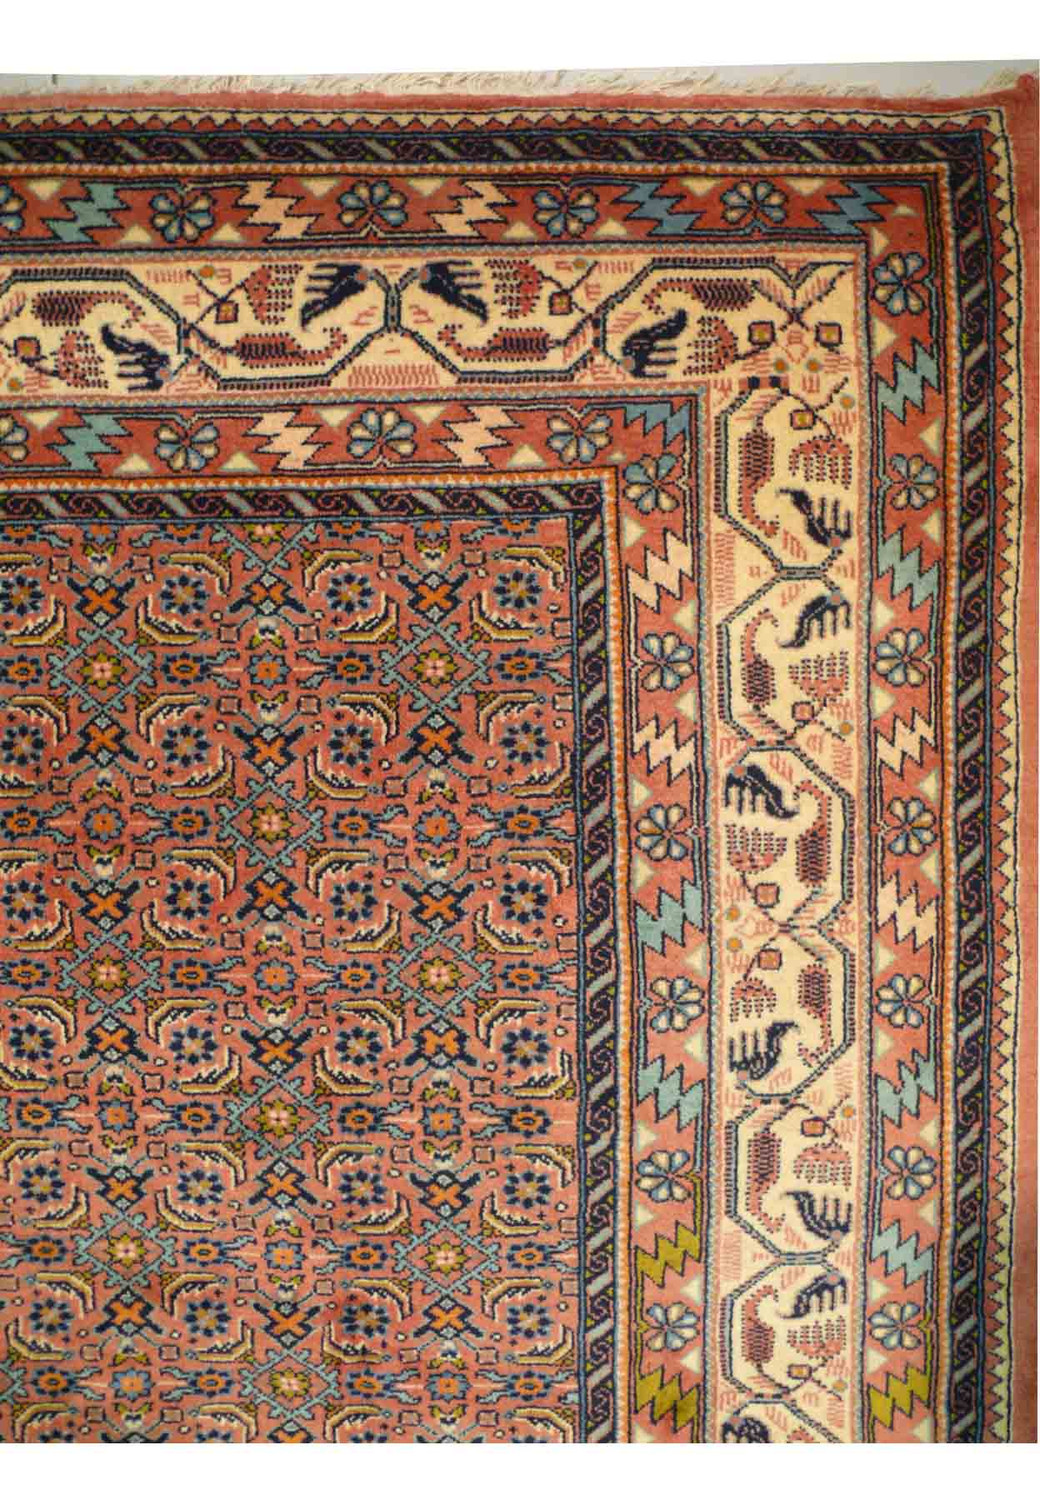 7 x 10 Persian Enjalas Rug All-Over Design